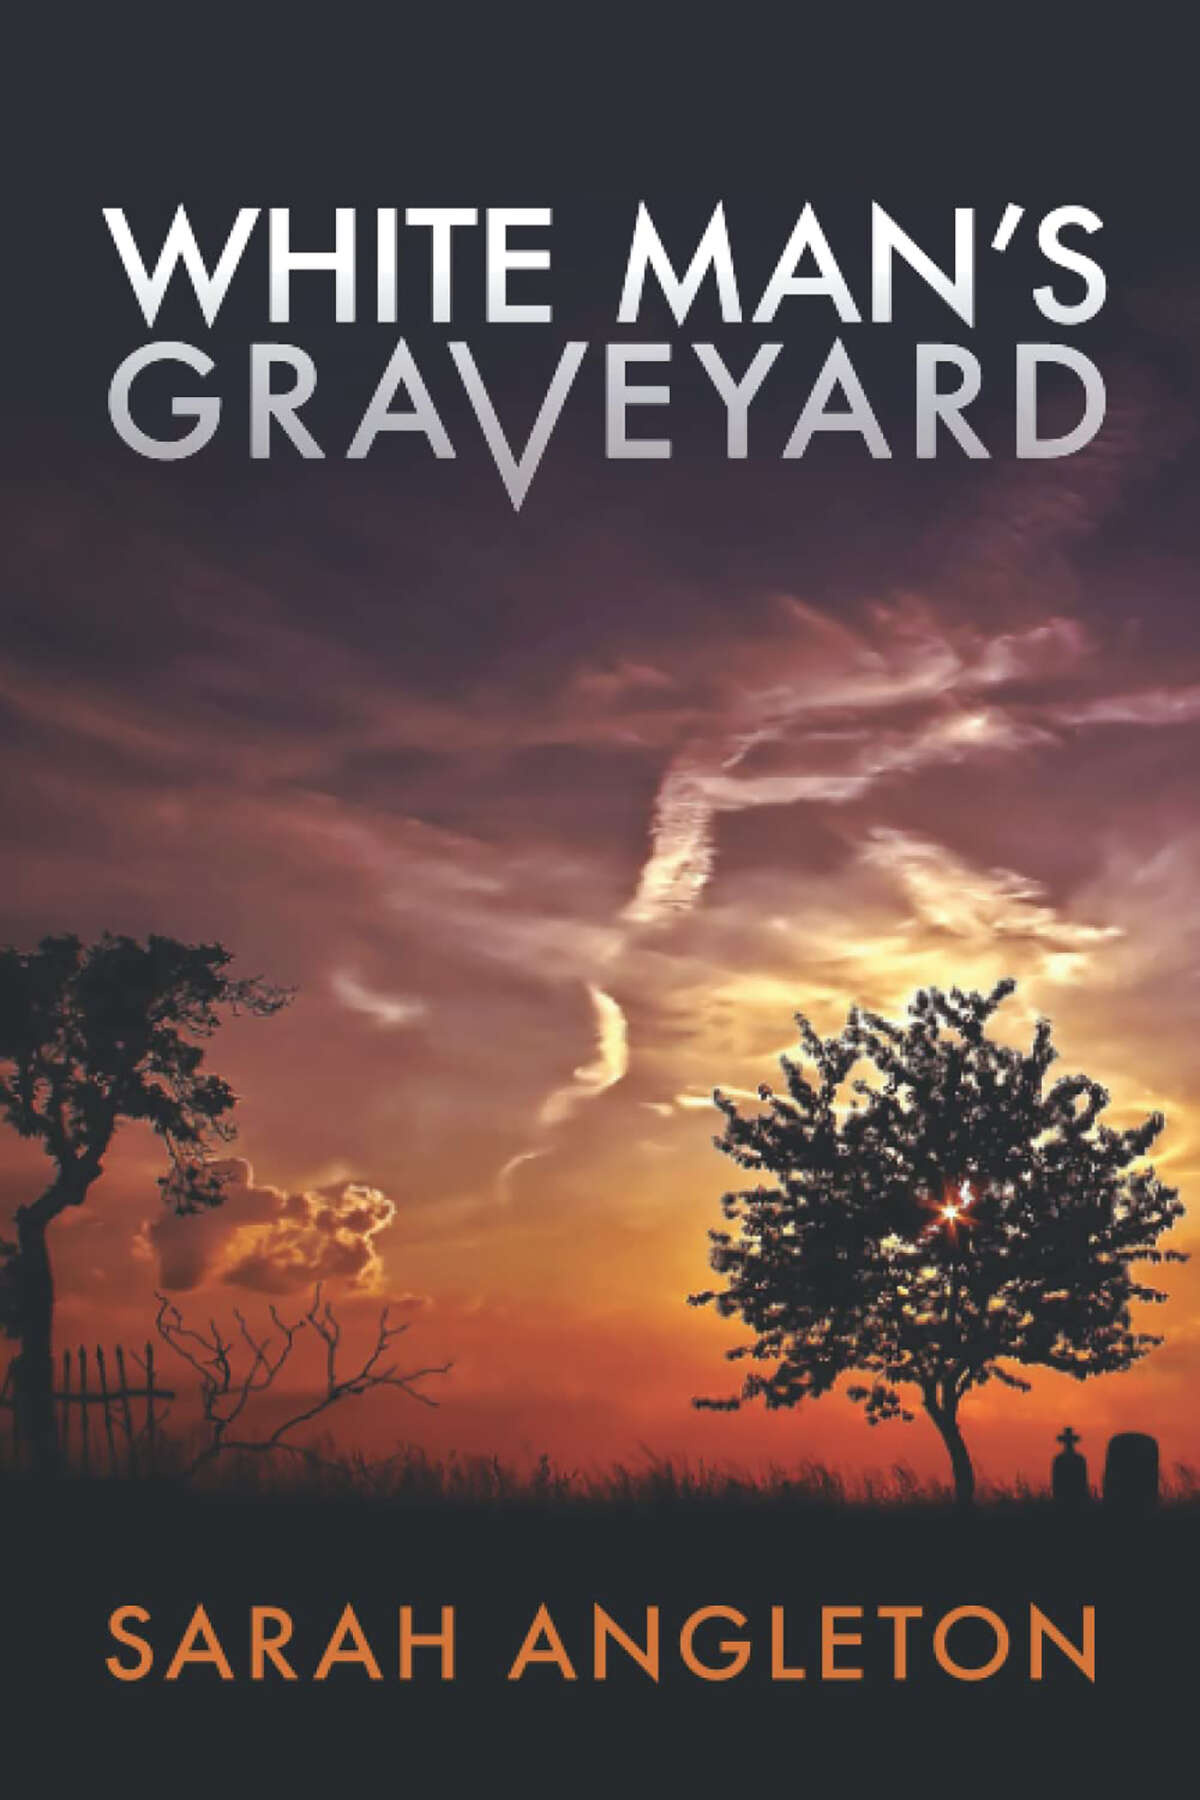 "White Man's Graveyard" is the third historical fiction novel from Jacksonville native Sarah McClintock Angleton.